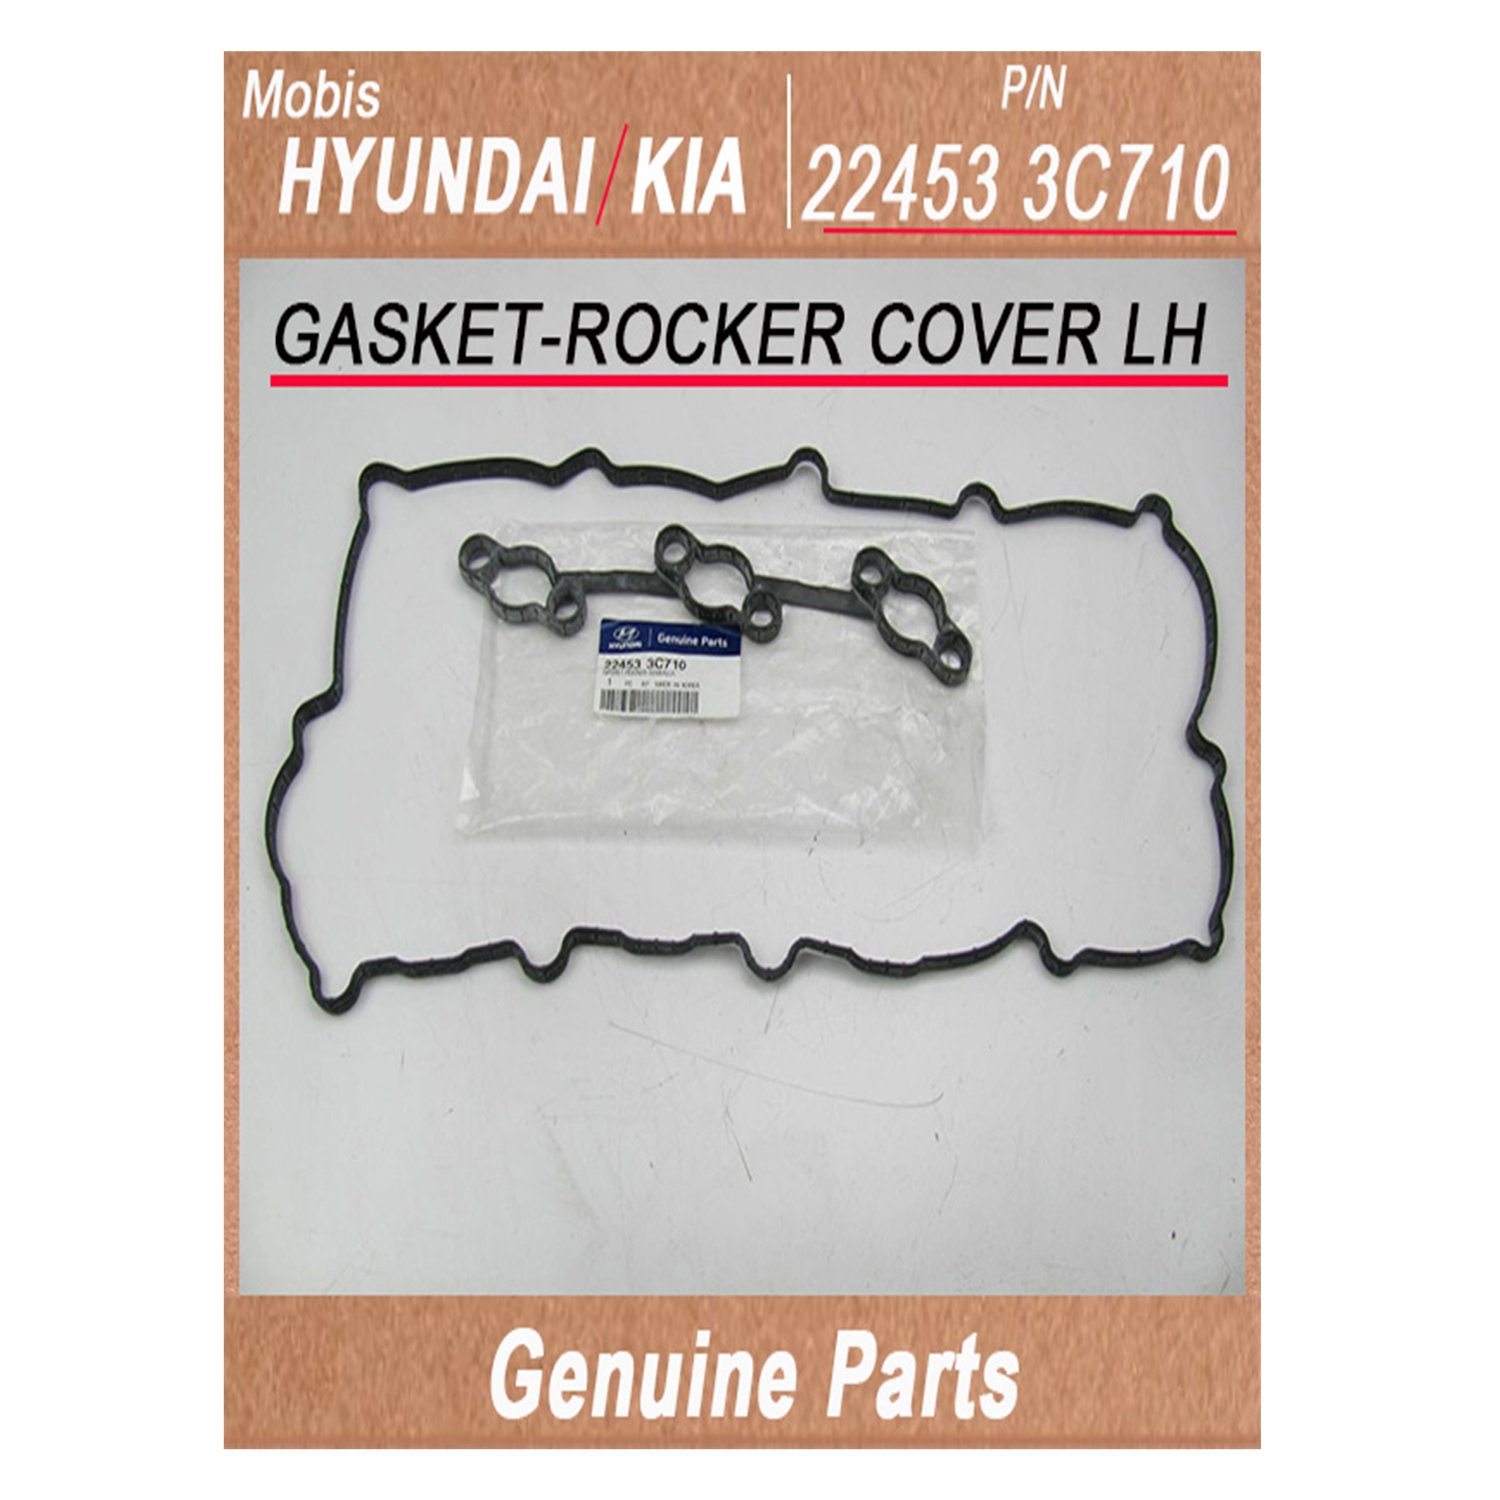 224533C710 _ GASKET_ROCKER COVER LH _ Genuine Korean Automotive Spare Parts _ Hyundai Kia _Mobis_